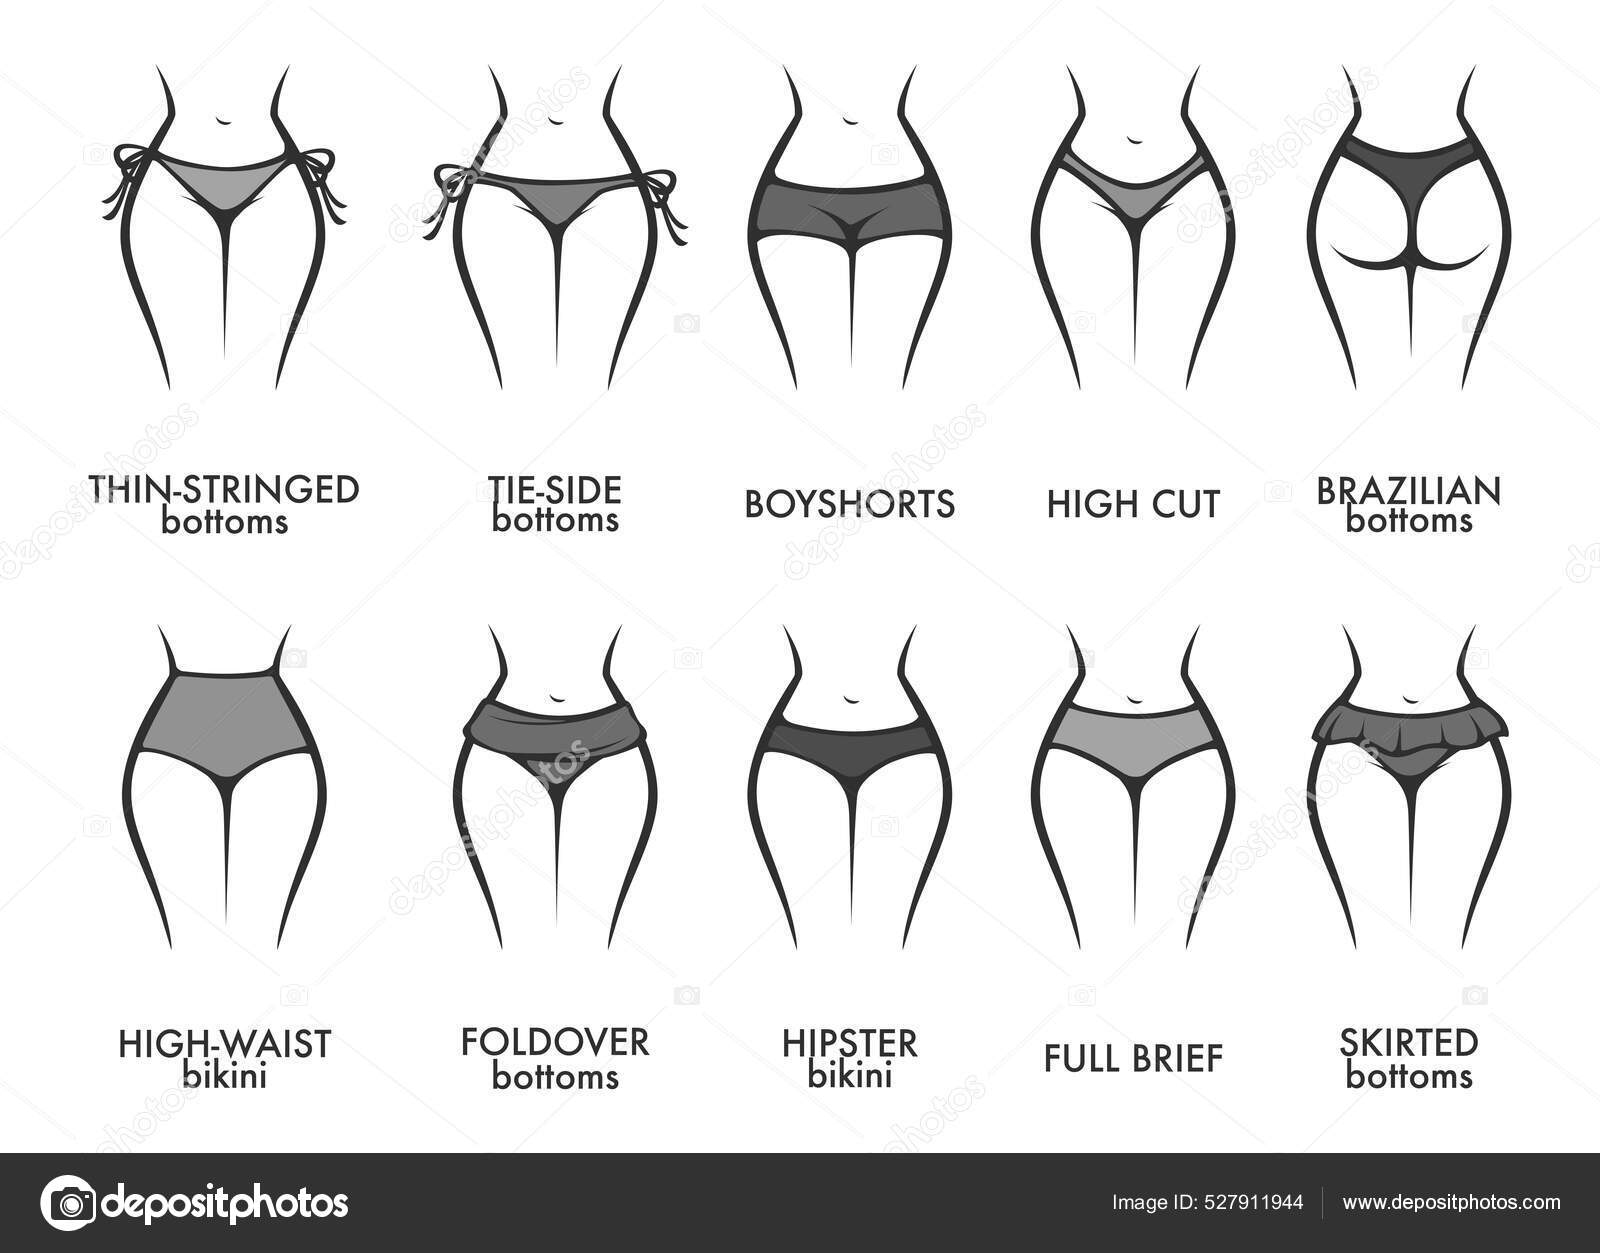 https://st.depositphotos.com/1028367/52791/v/1600/depositphotos_527911944-stock-illustration-woman-panties-models-and-types.jpg